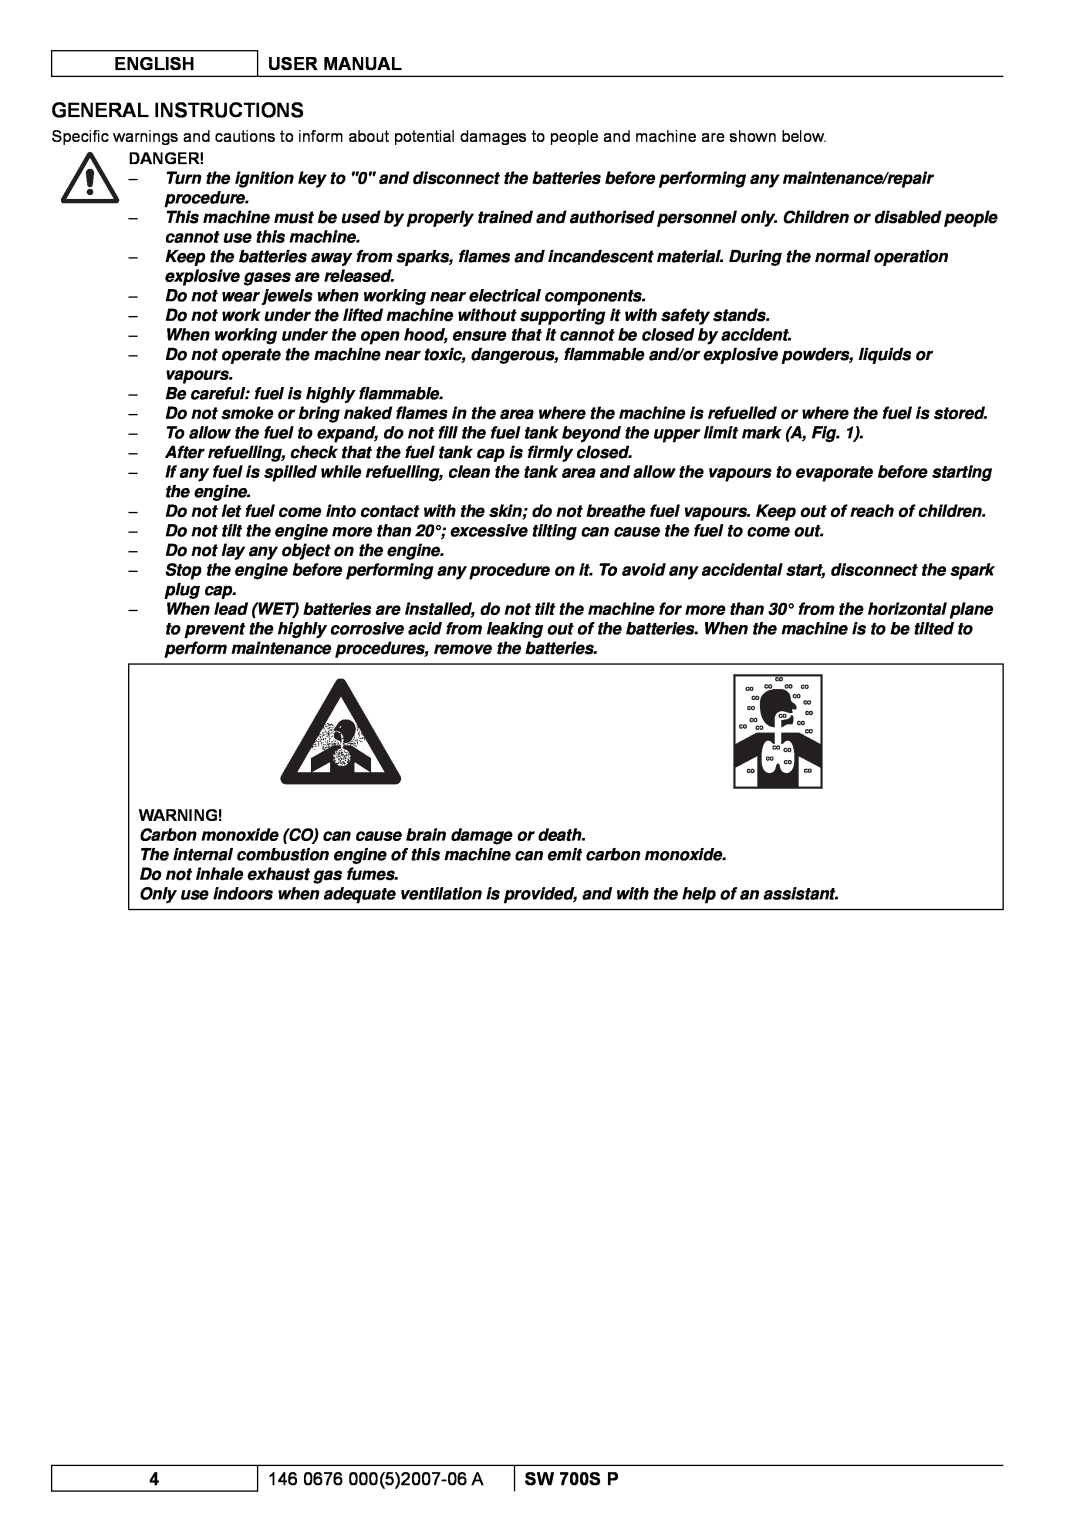 Nilfisk-Advance America SW 700S P manuel dutilisation General Instructions, English, 146 0676 00052007-06A, Danger 